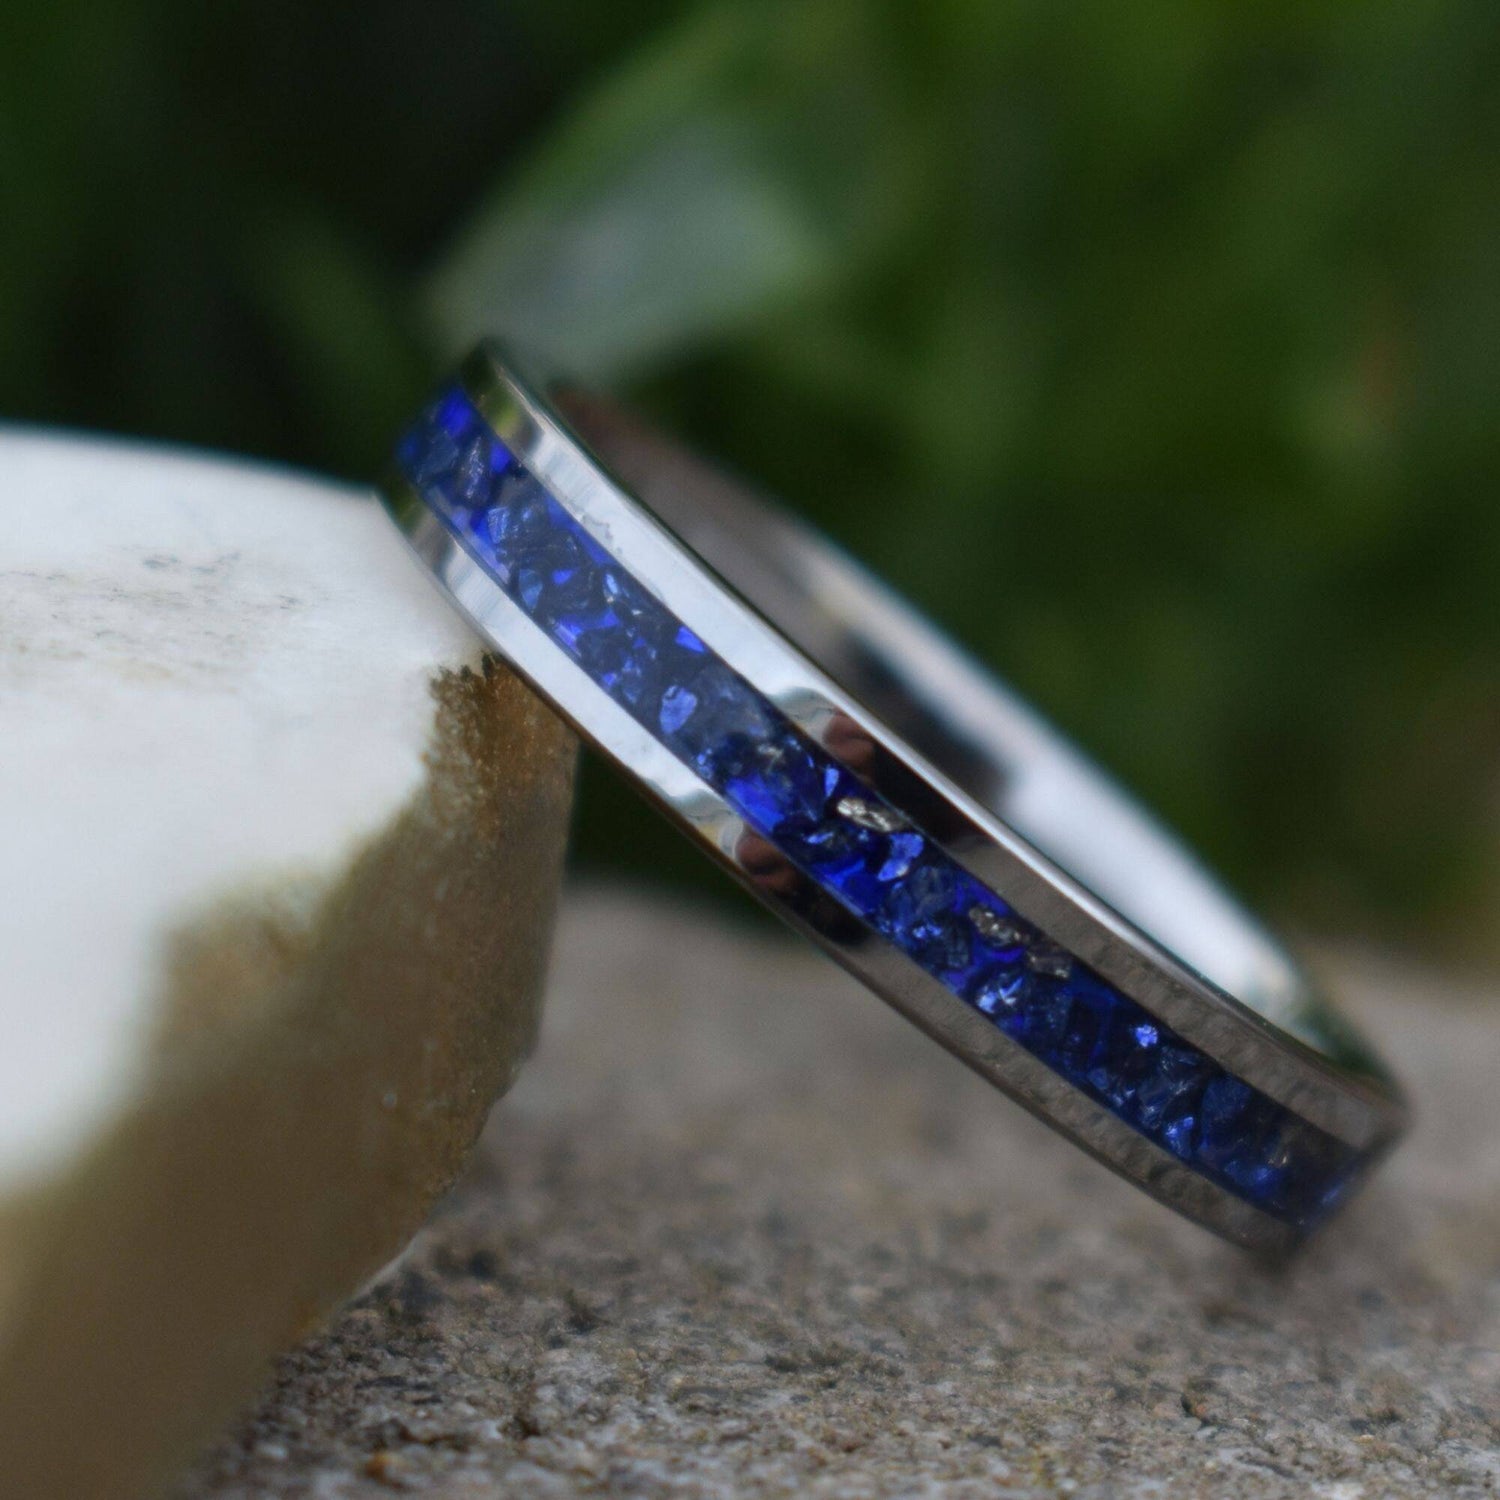 Blue Sapphire & Diamond Engagement Ring 14k White Gold 1.35ct - CBR391